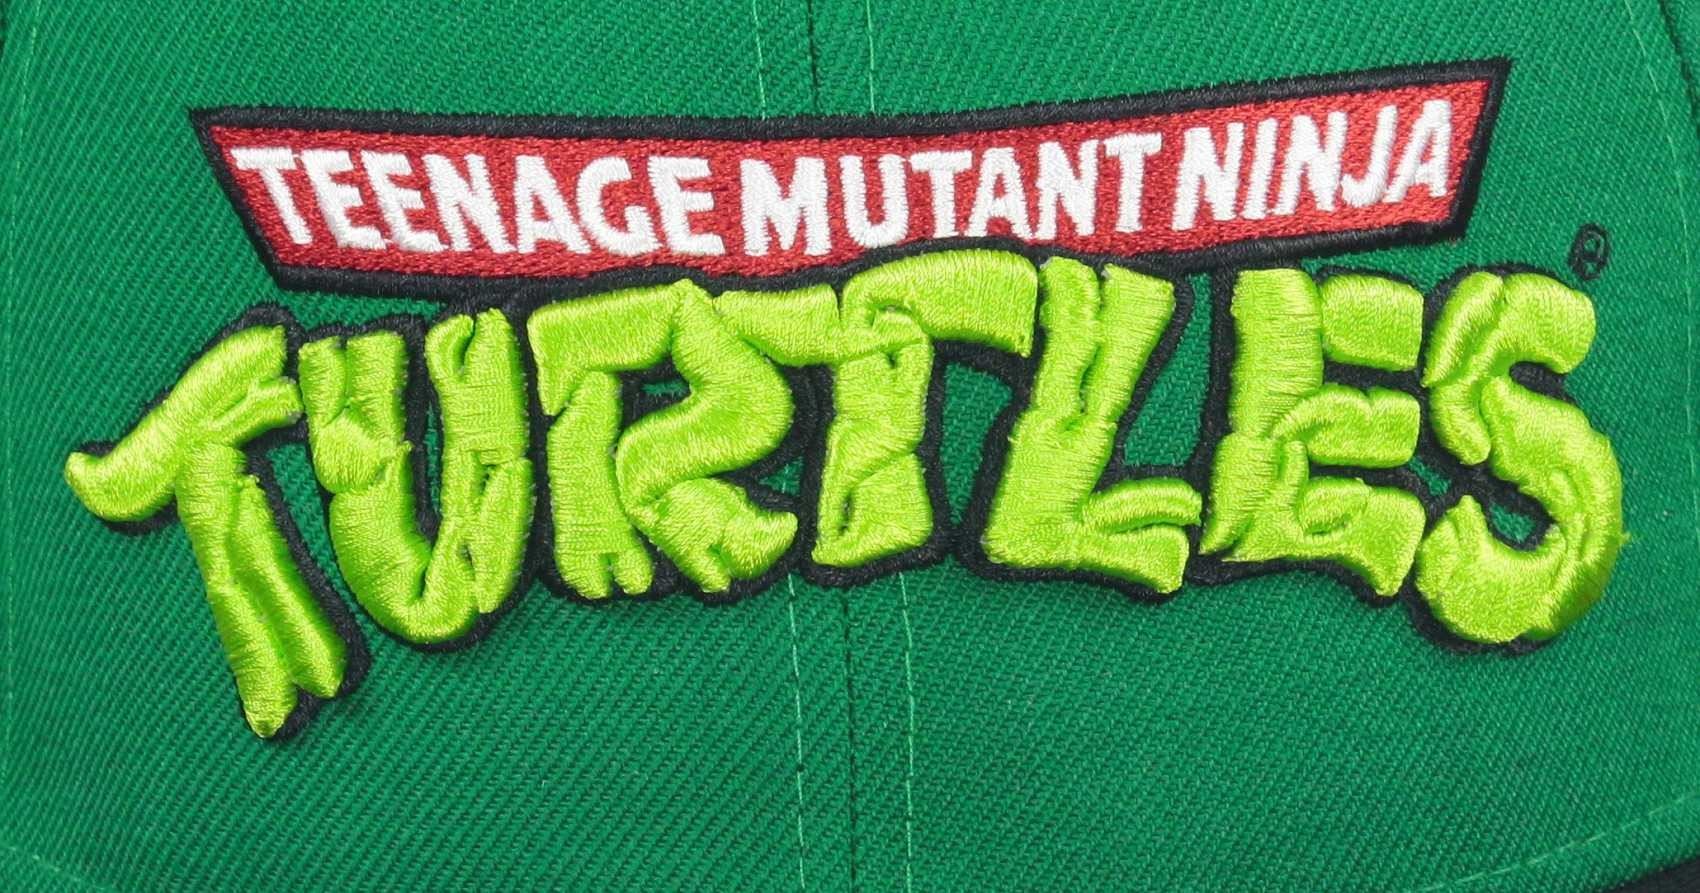 Teenage Mutant Ninja Turtles TMNT Edition 59Fifty Basecap New Era